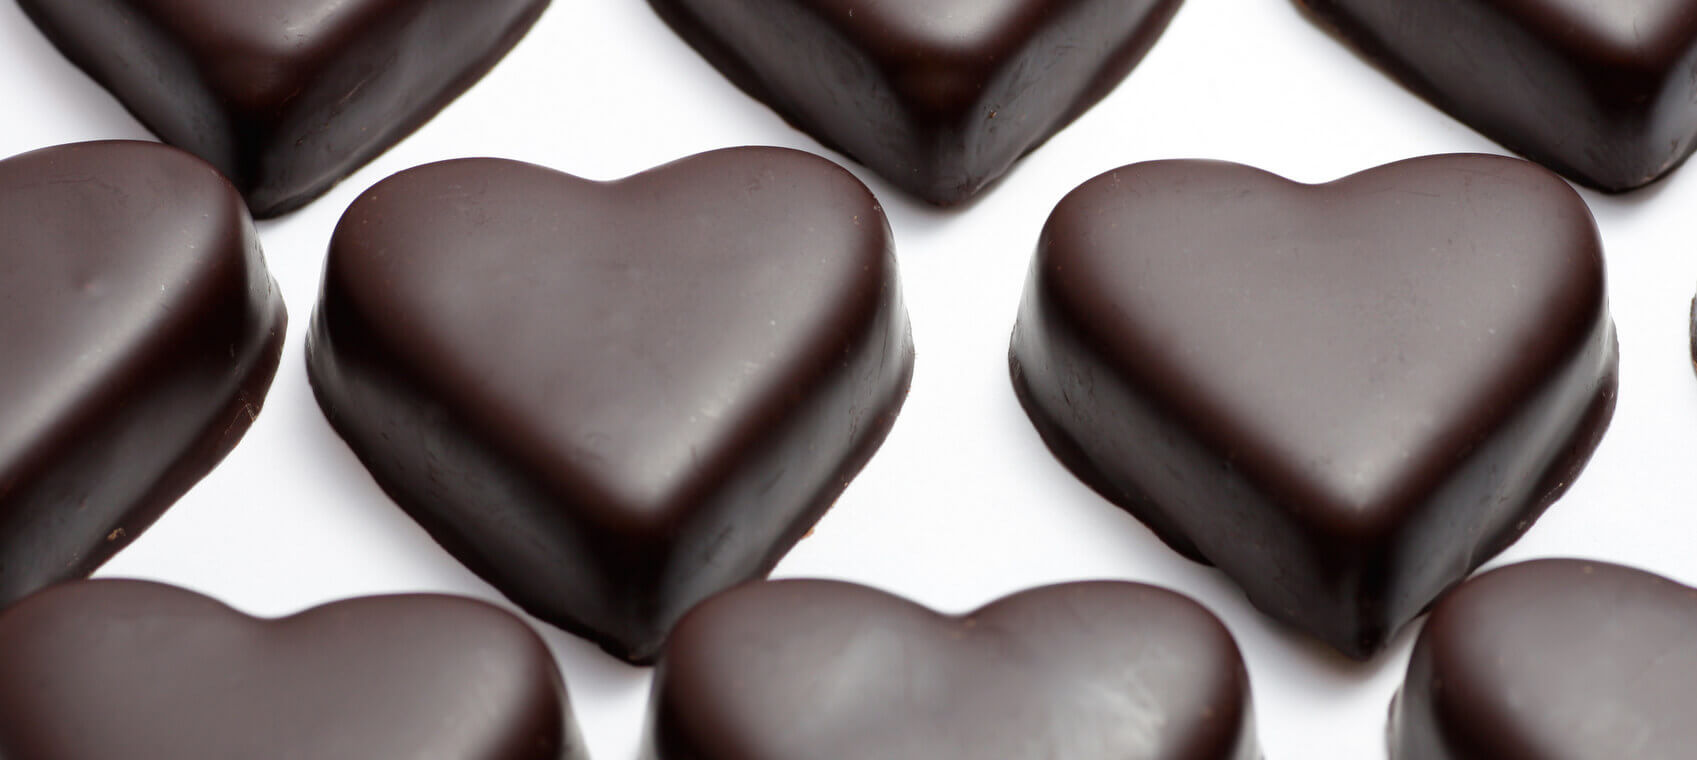 Dark Chocolate Is Good For Heart Health